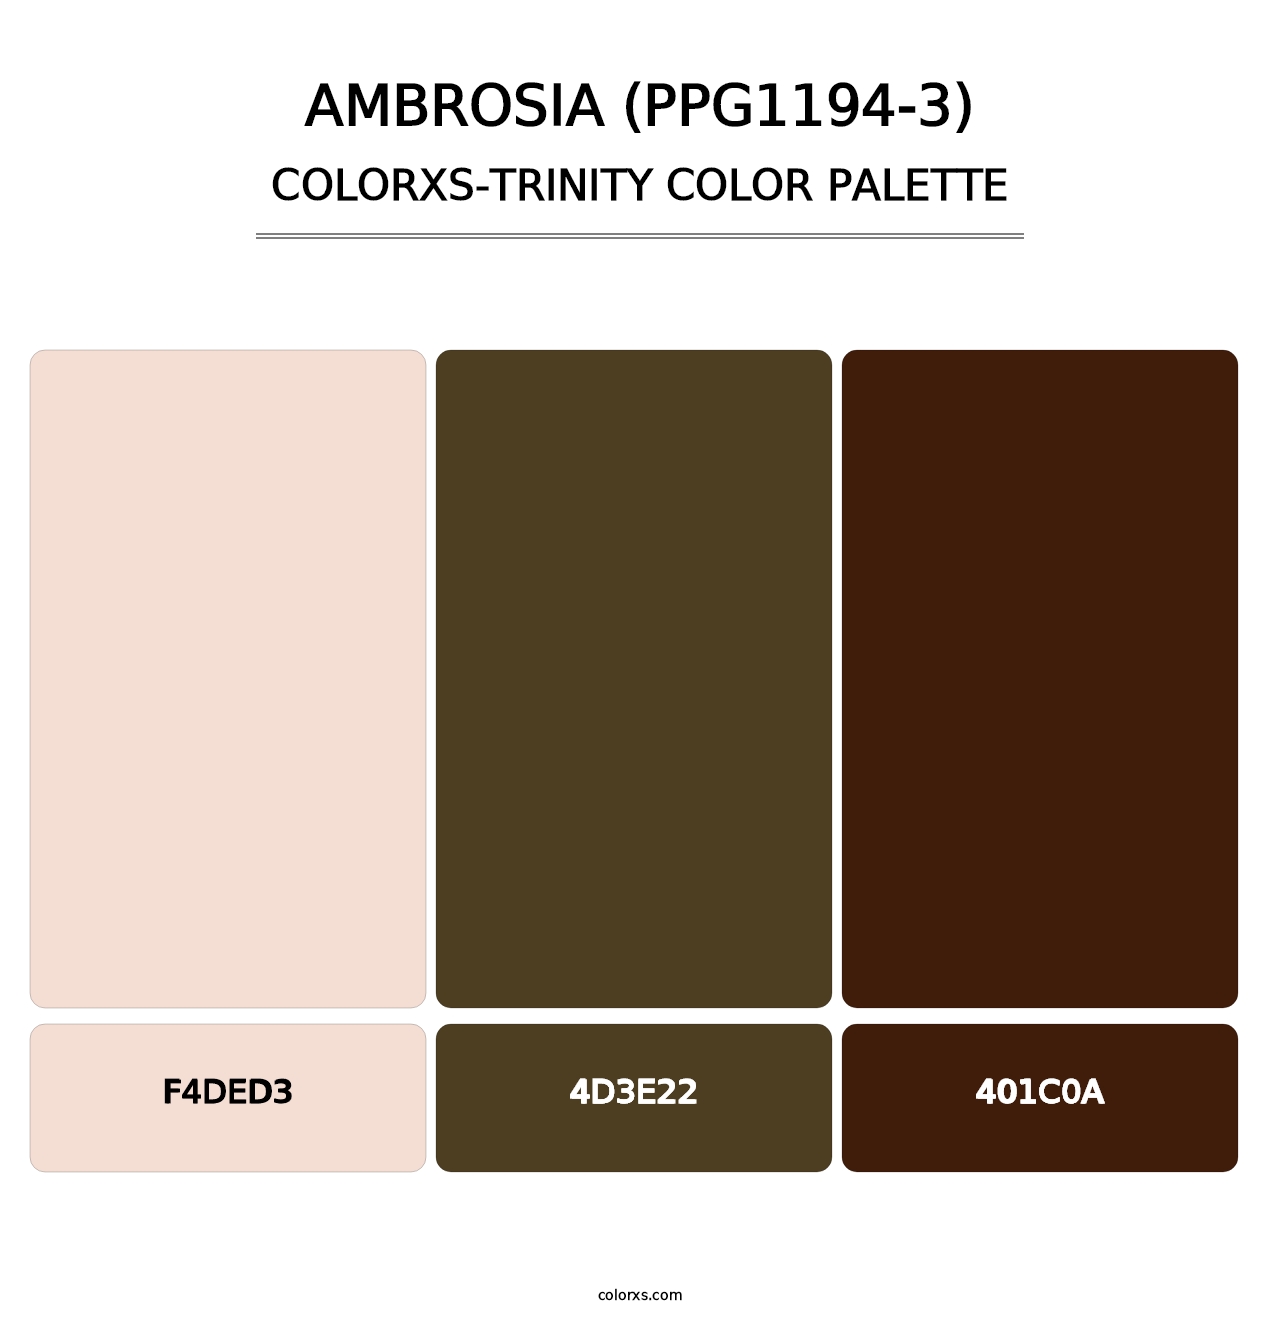 Ambrosia (PPG1194-3) - Colorxs Trinity Palette